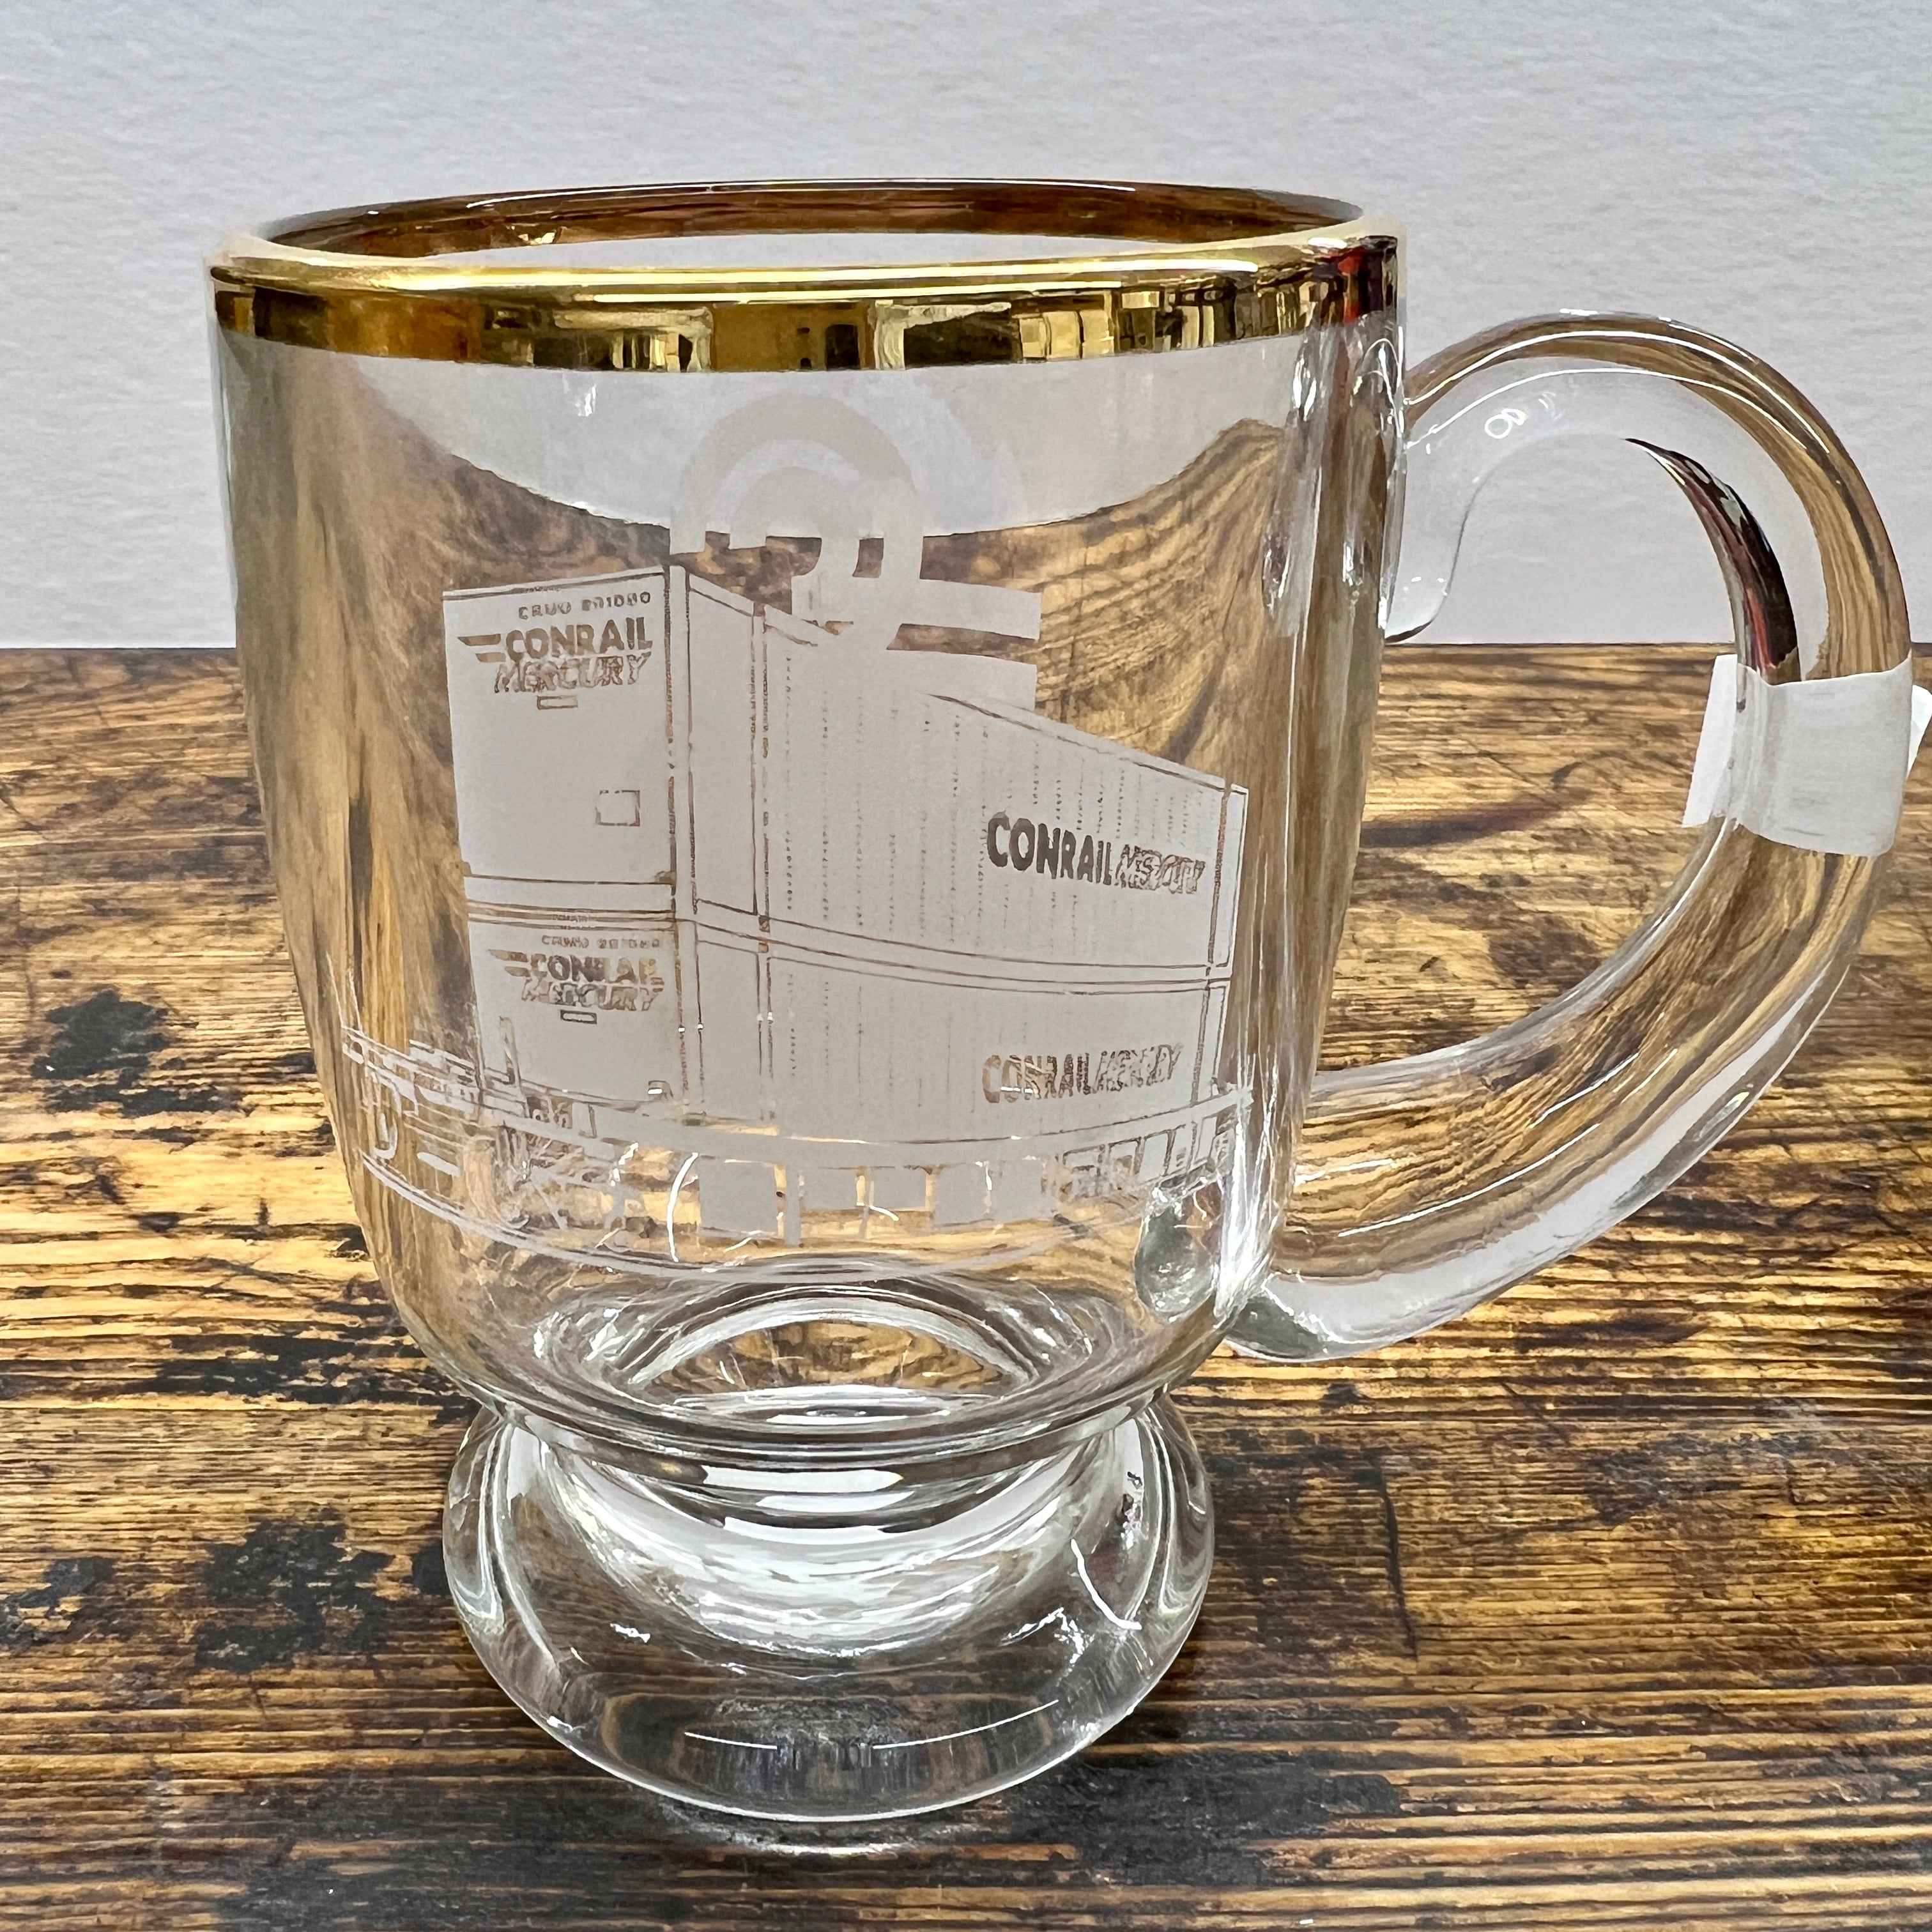 Conrail "Awarded for Safety 1995" Mug